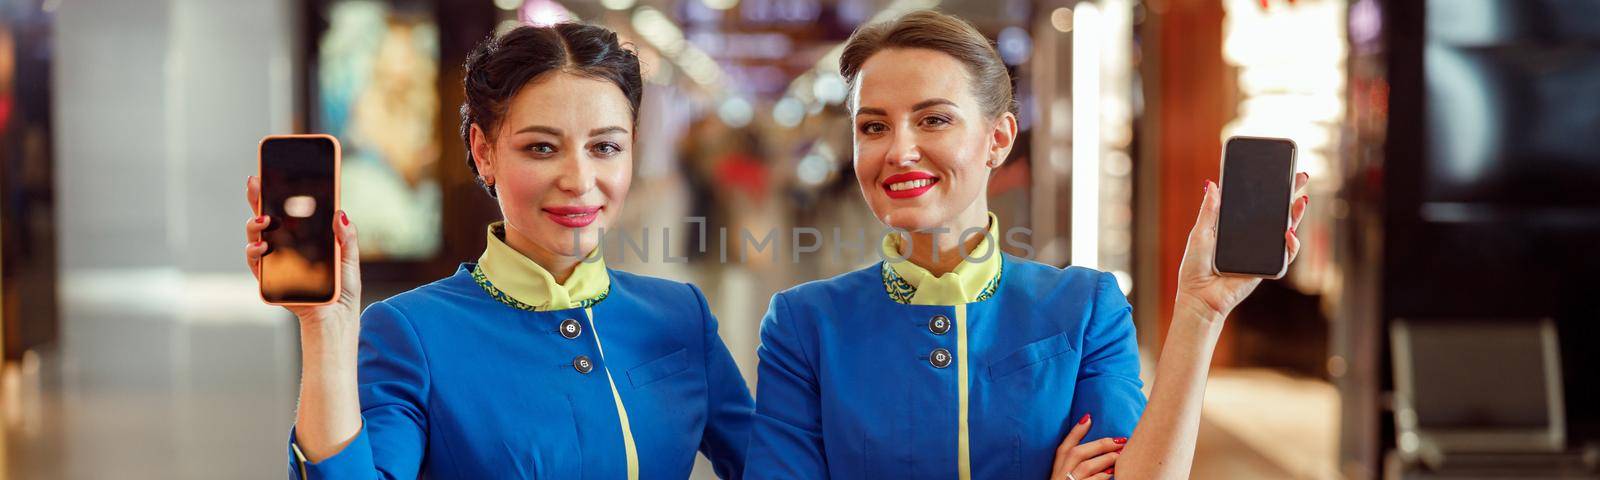 Cheerful stewardesses with smartphone standing in airport terminal by Yaroslav_astakhov